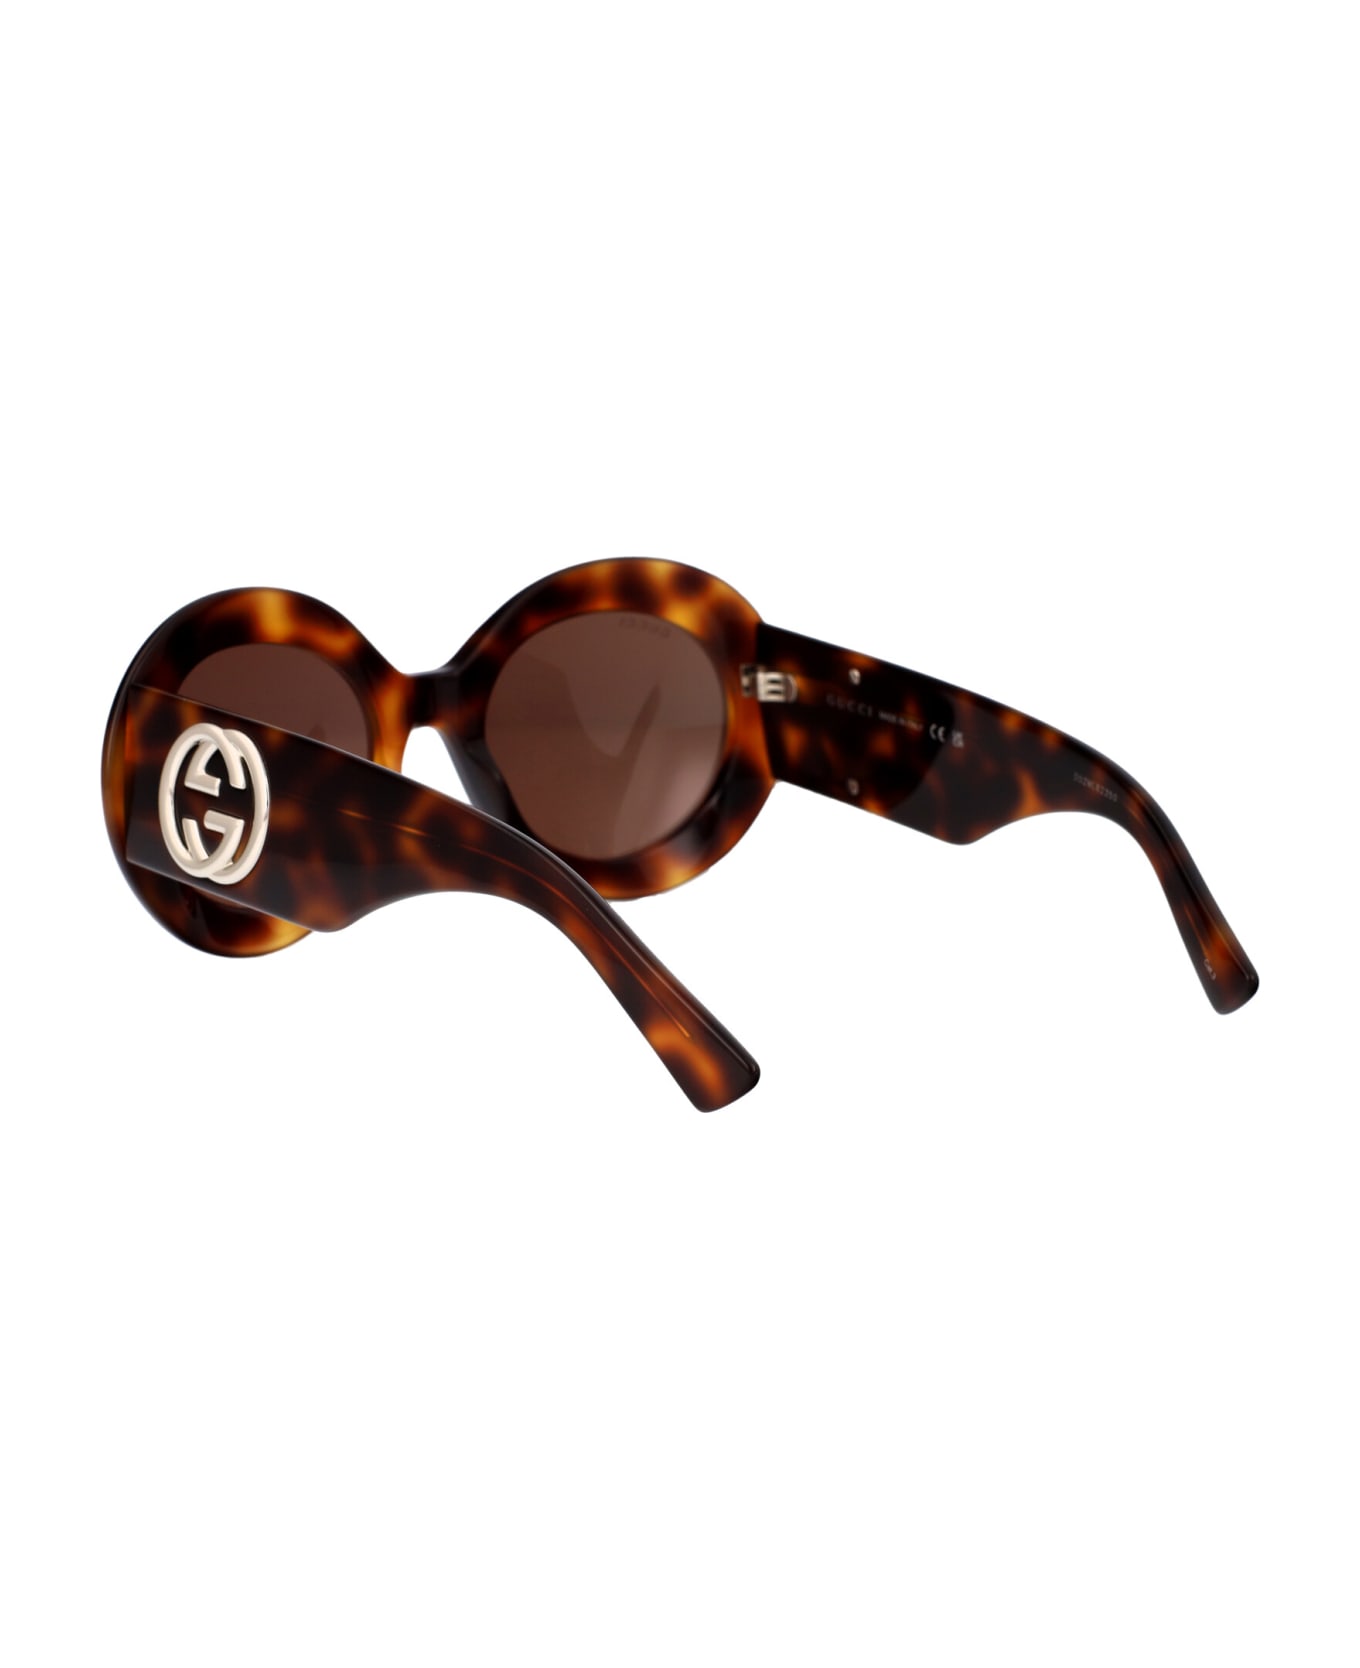 Gucci Eyewear Gg1647s Sunglasses - 009 HAVANA HAVANA BROWN サングラス